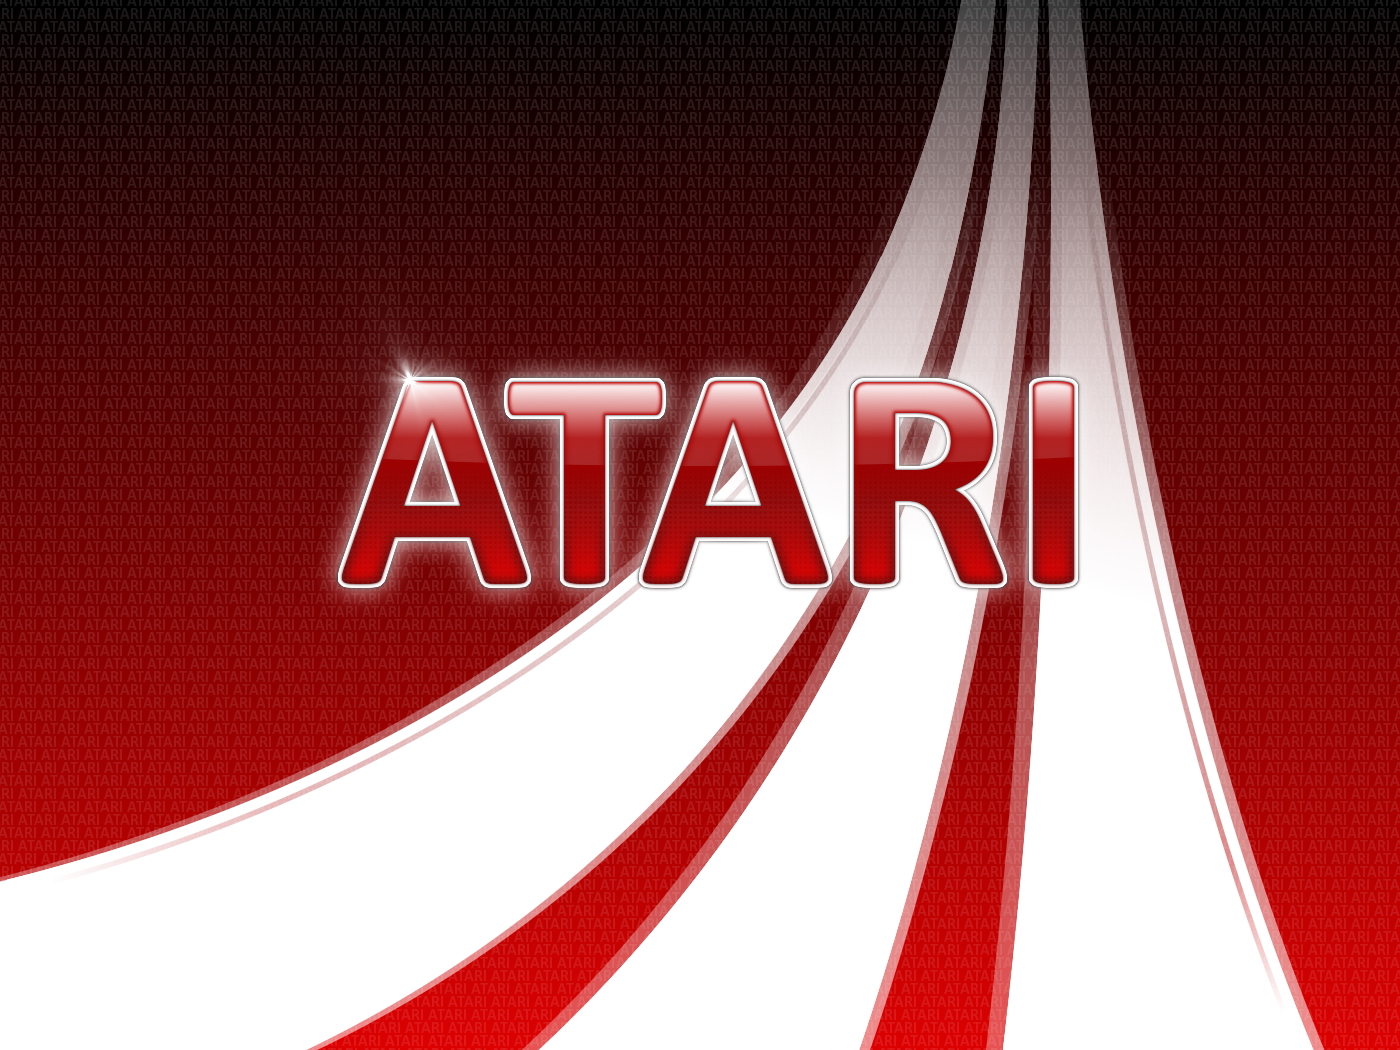 Atari Arcade Pong